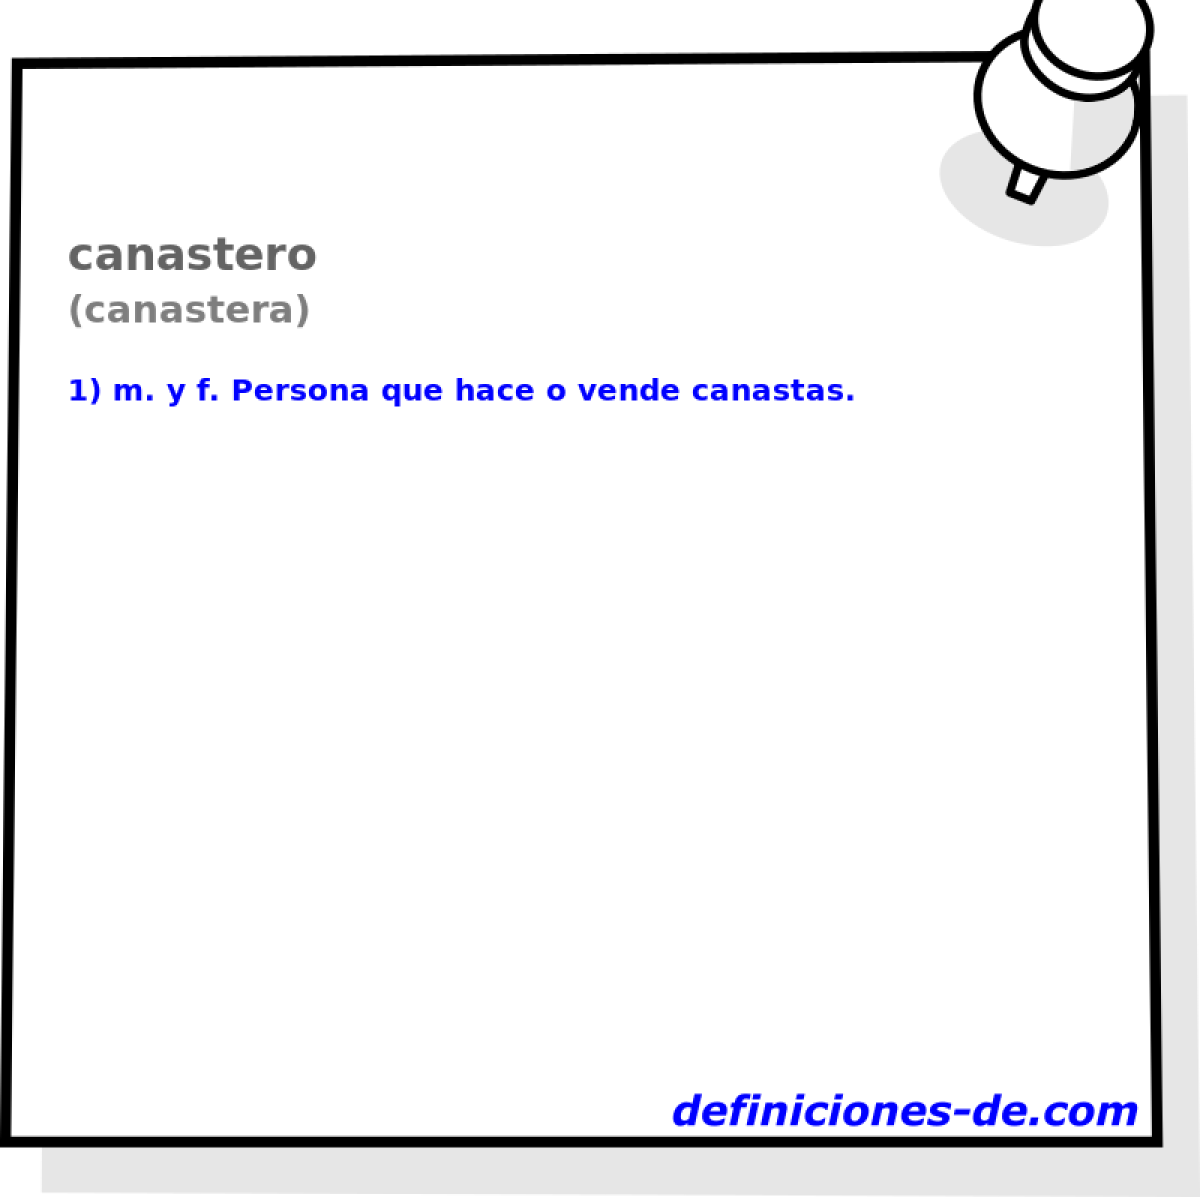 canastero (canastera)